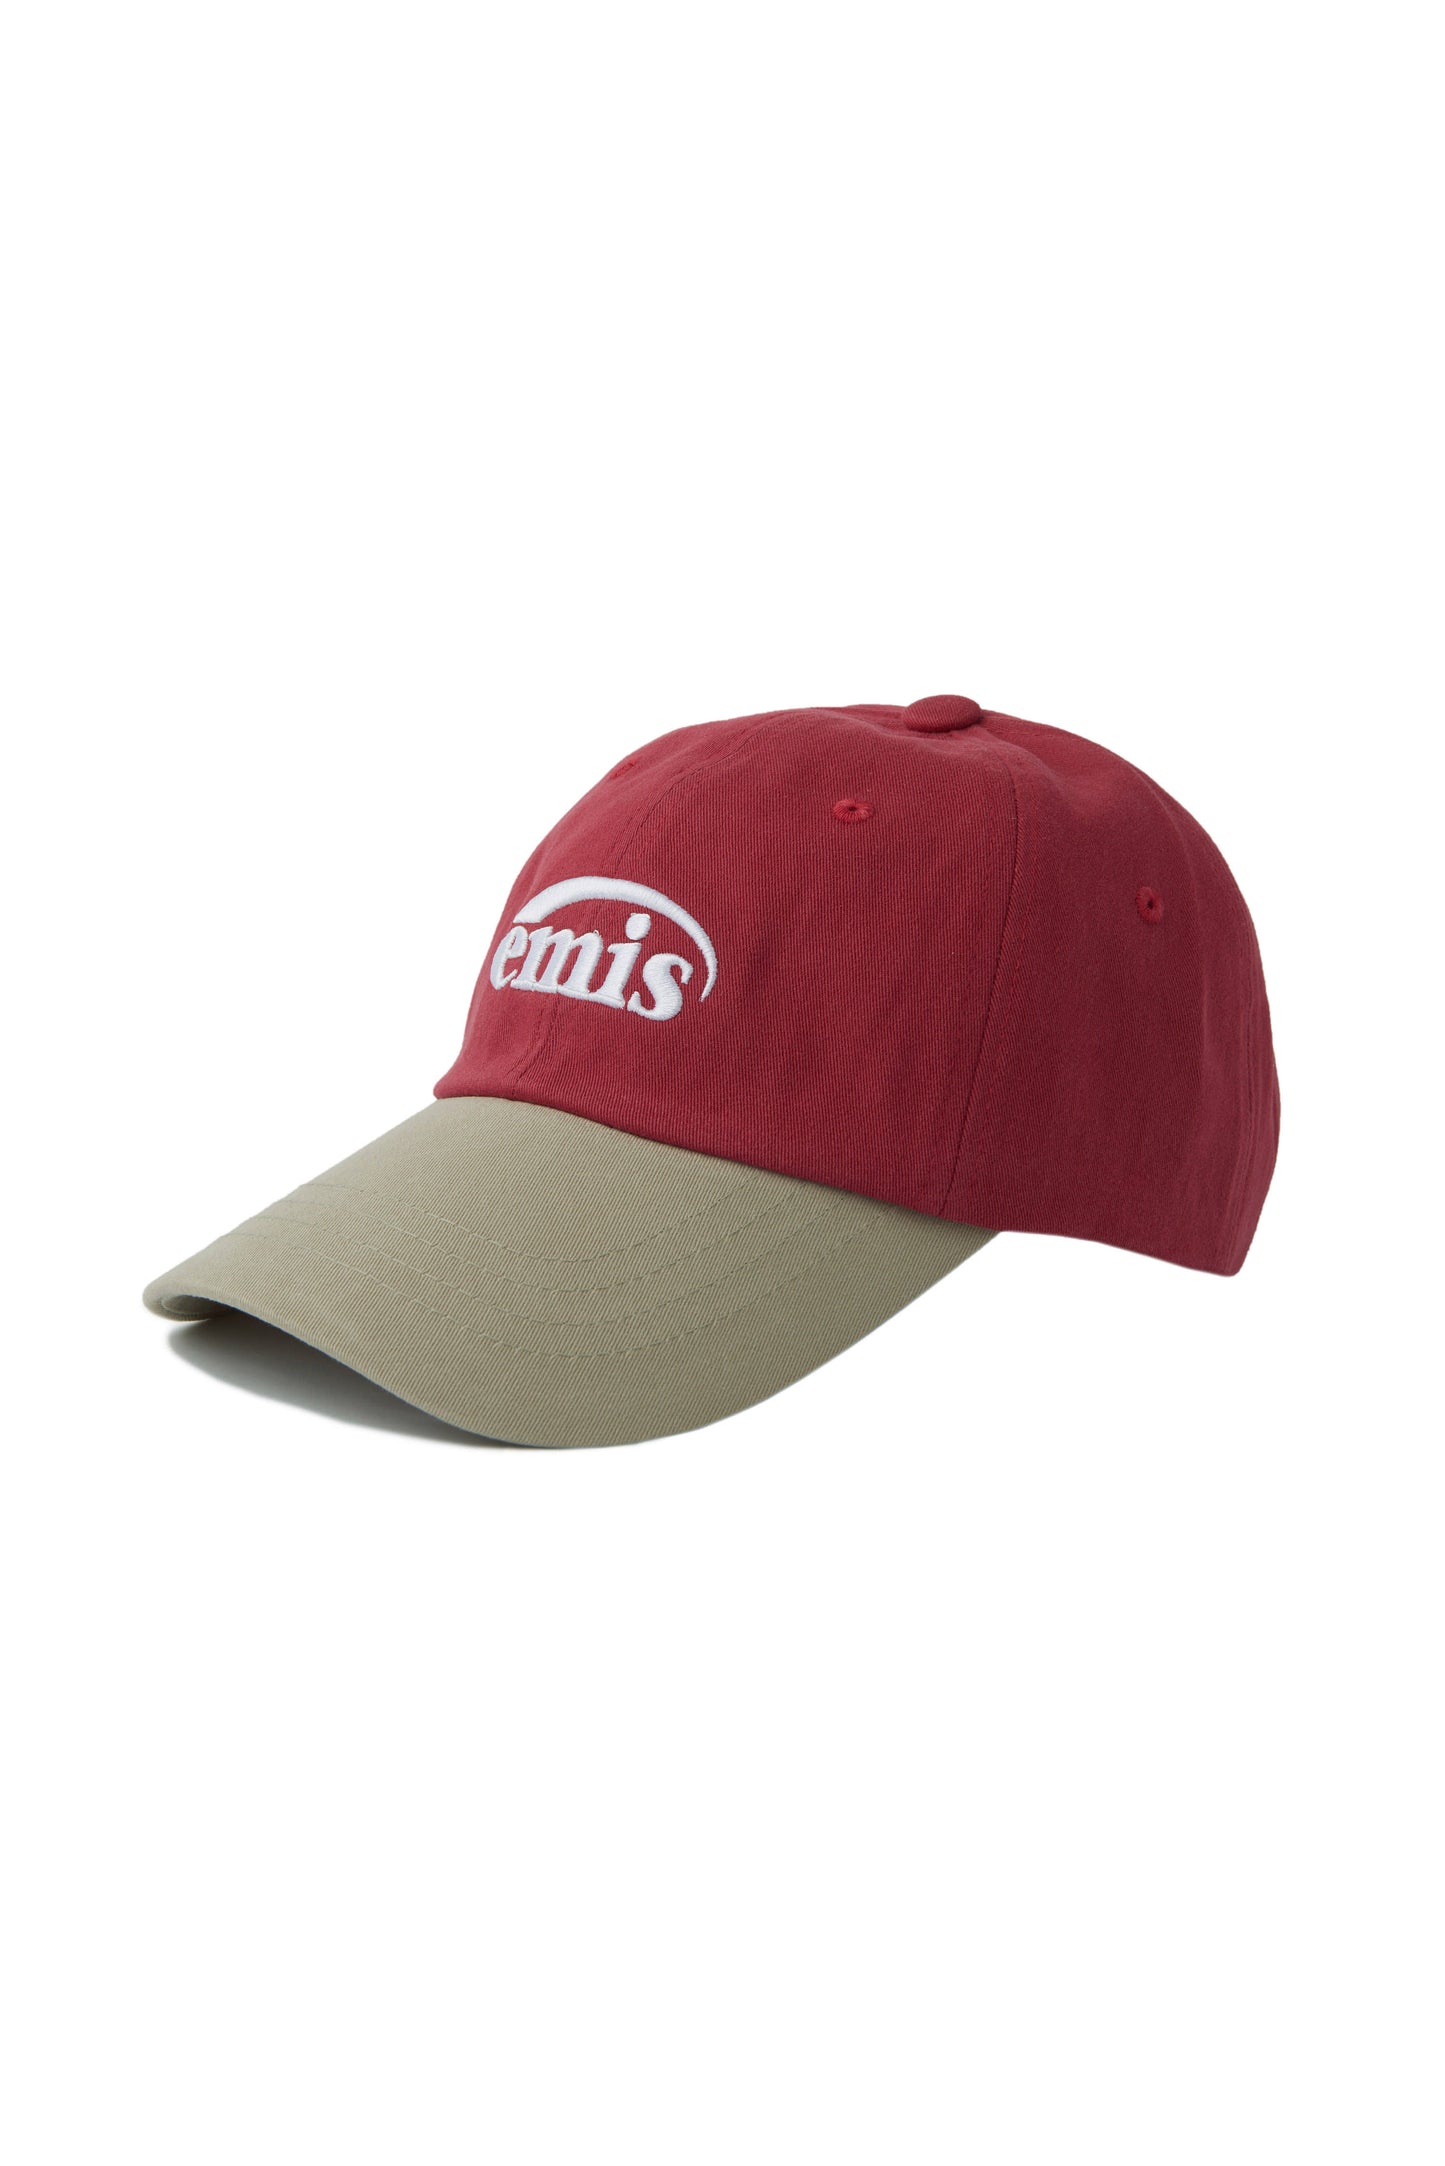 EMIS - NEW LOGO MIX BALL CAP BEIGE RED